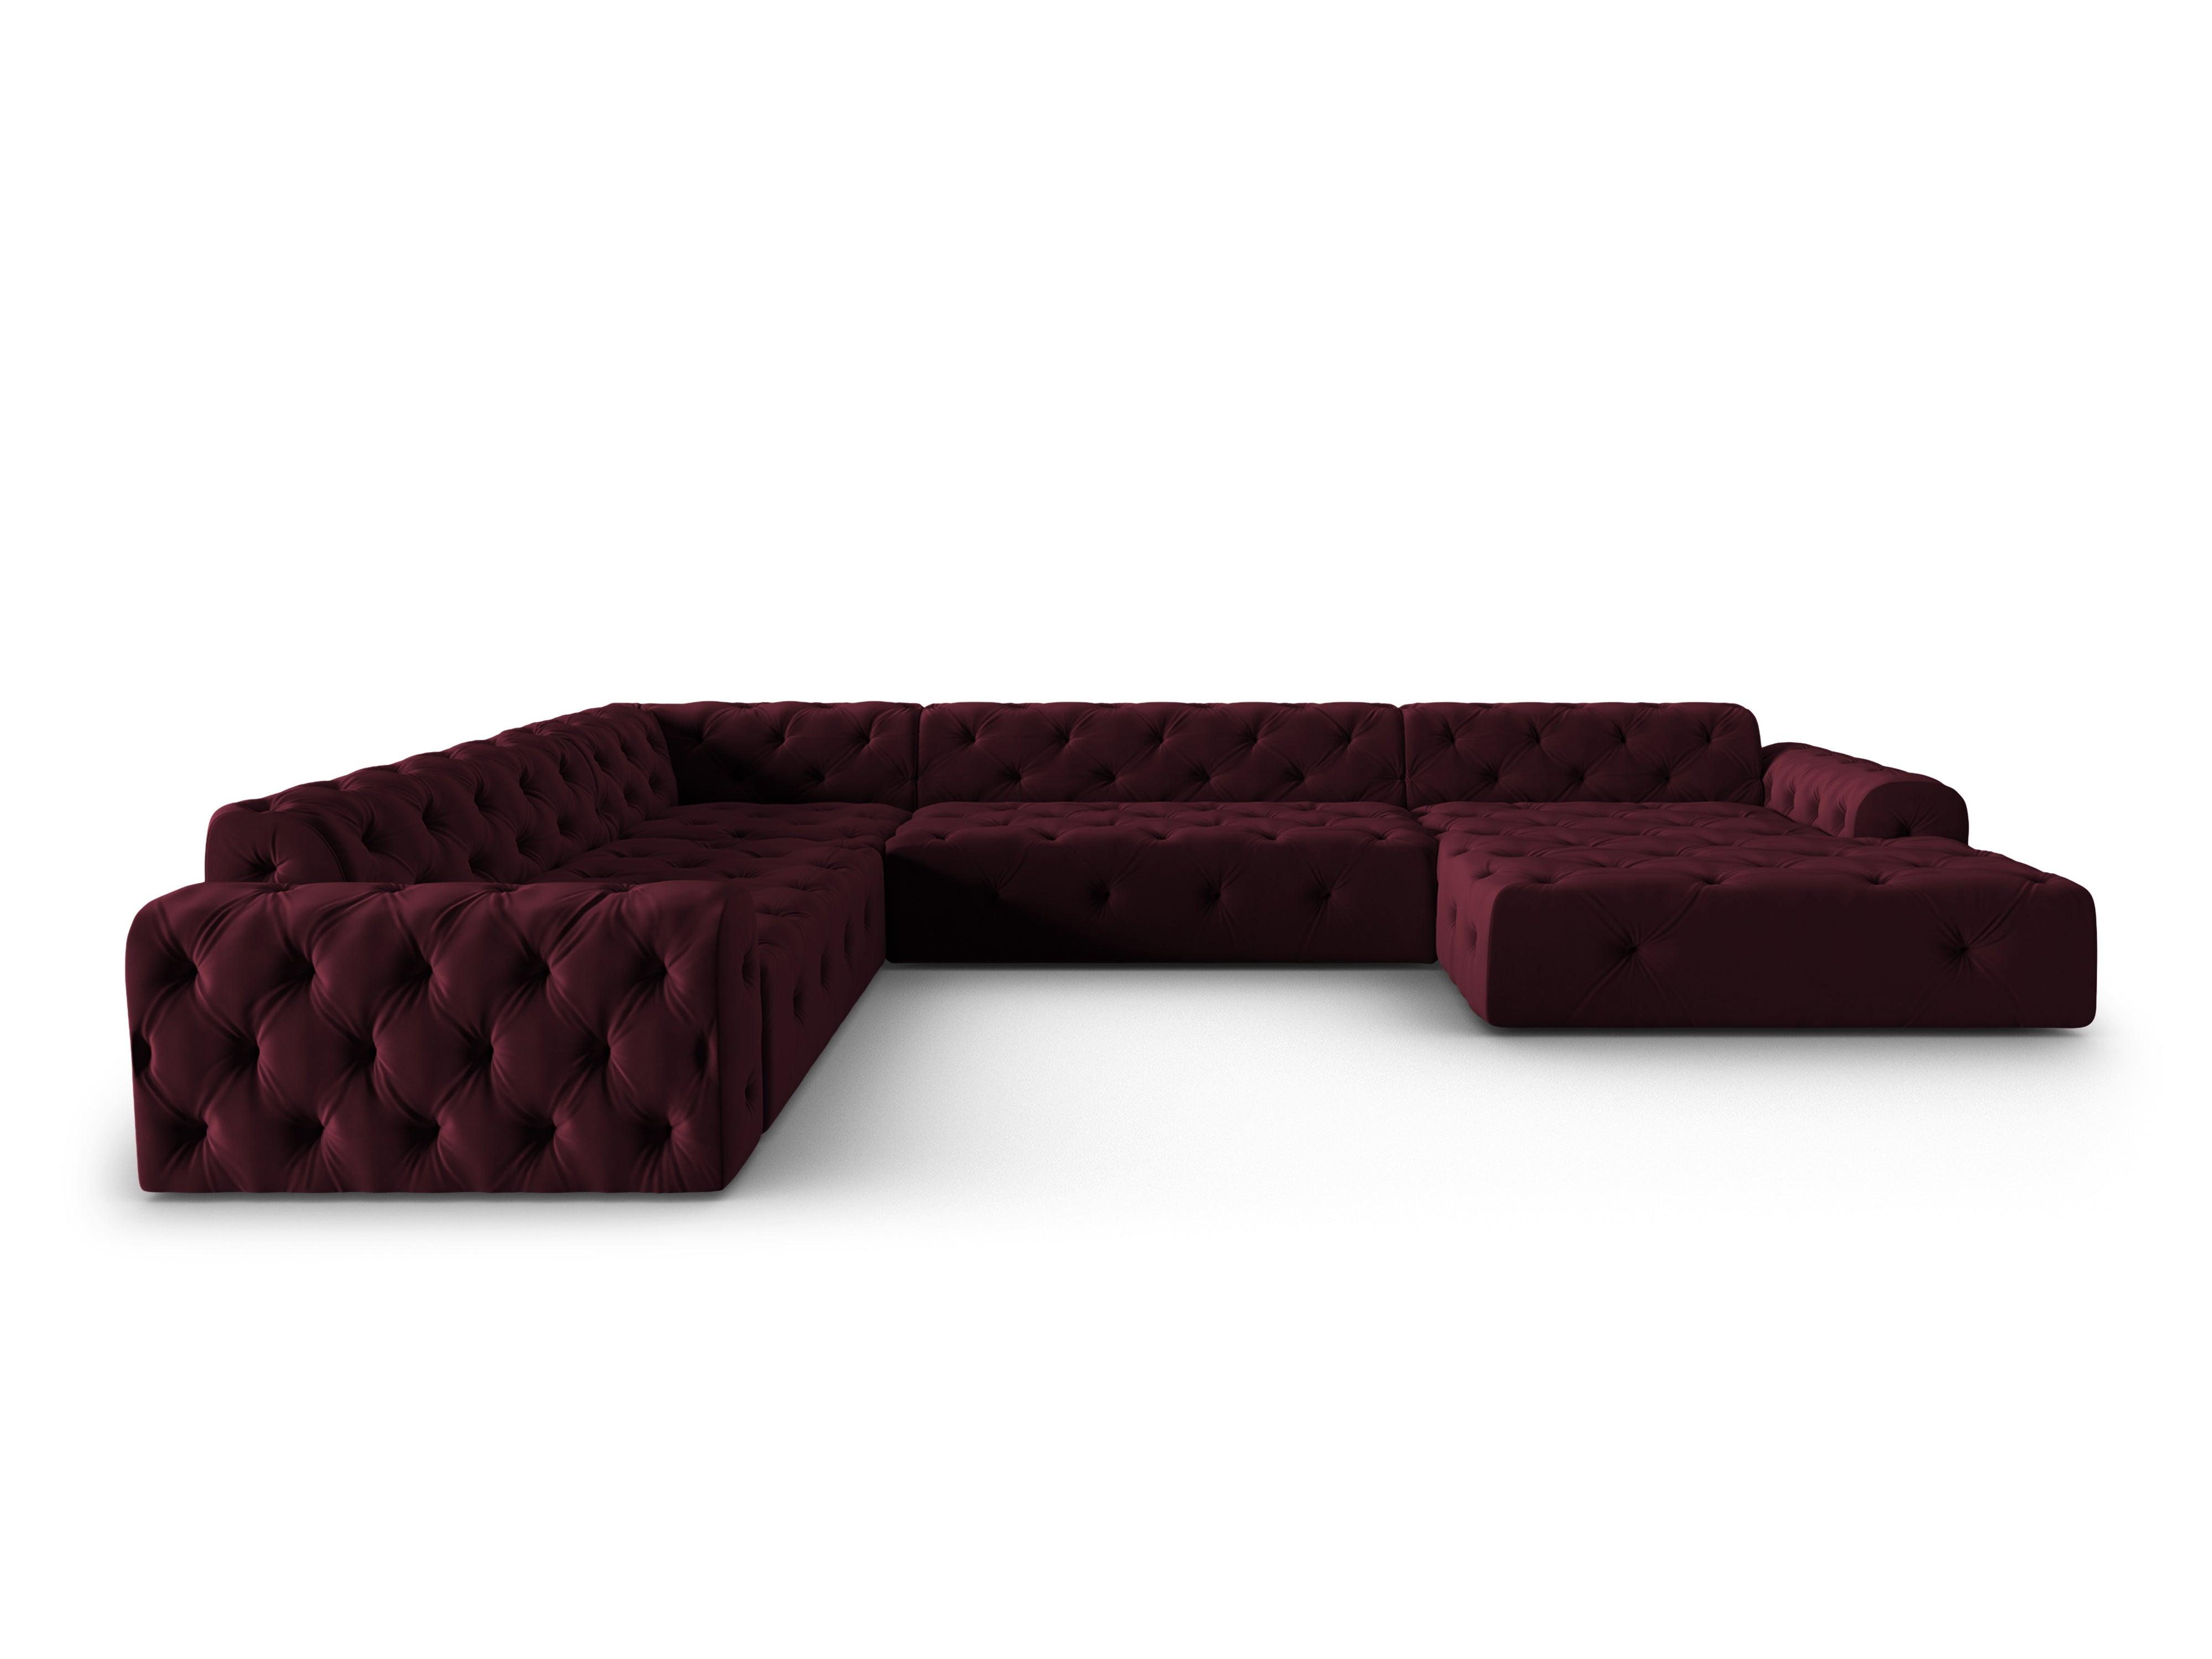 Velvet Panoramic Left Corner Sofa, "Candice", 6 Seats, 334x254x80
Made in Europe, Micadoni, Eye on Design